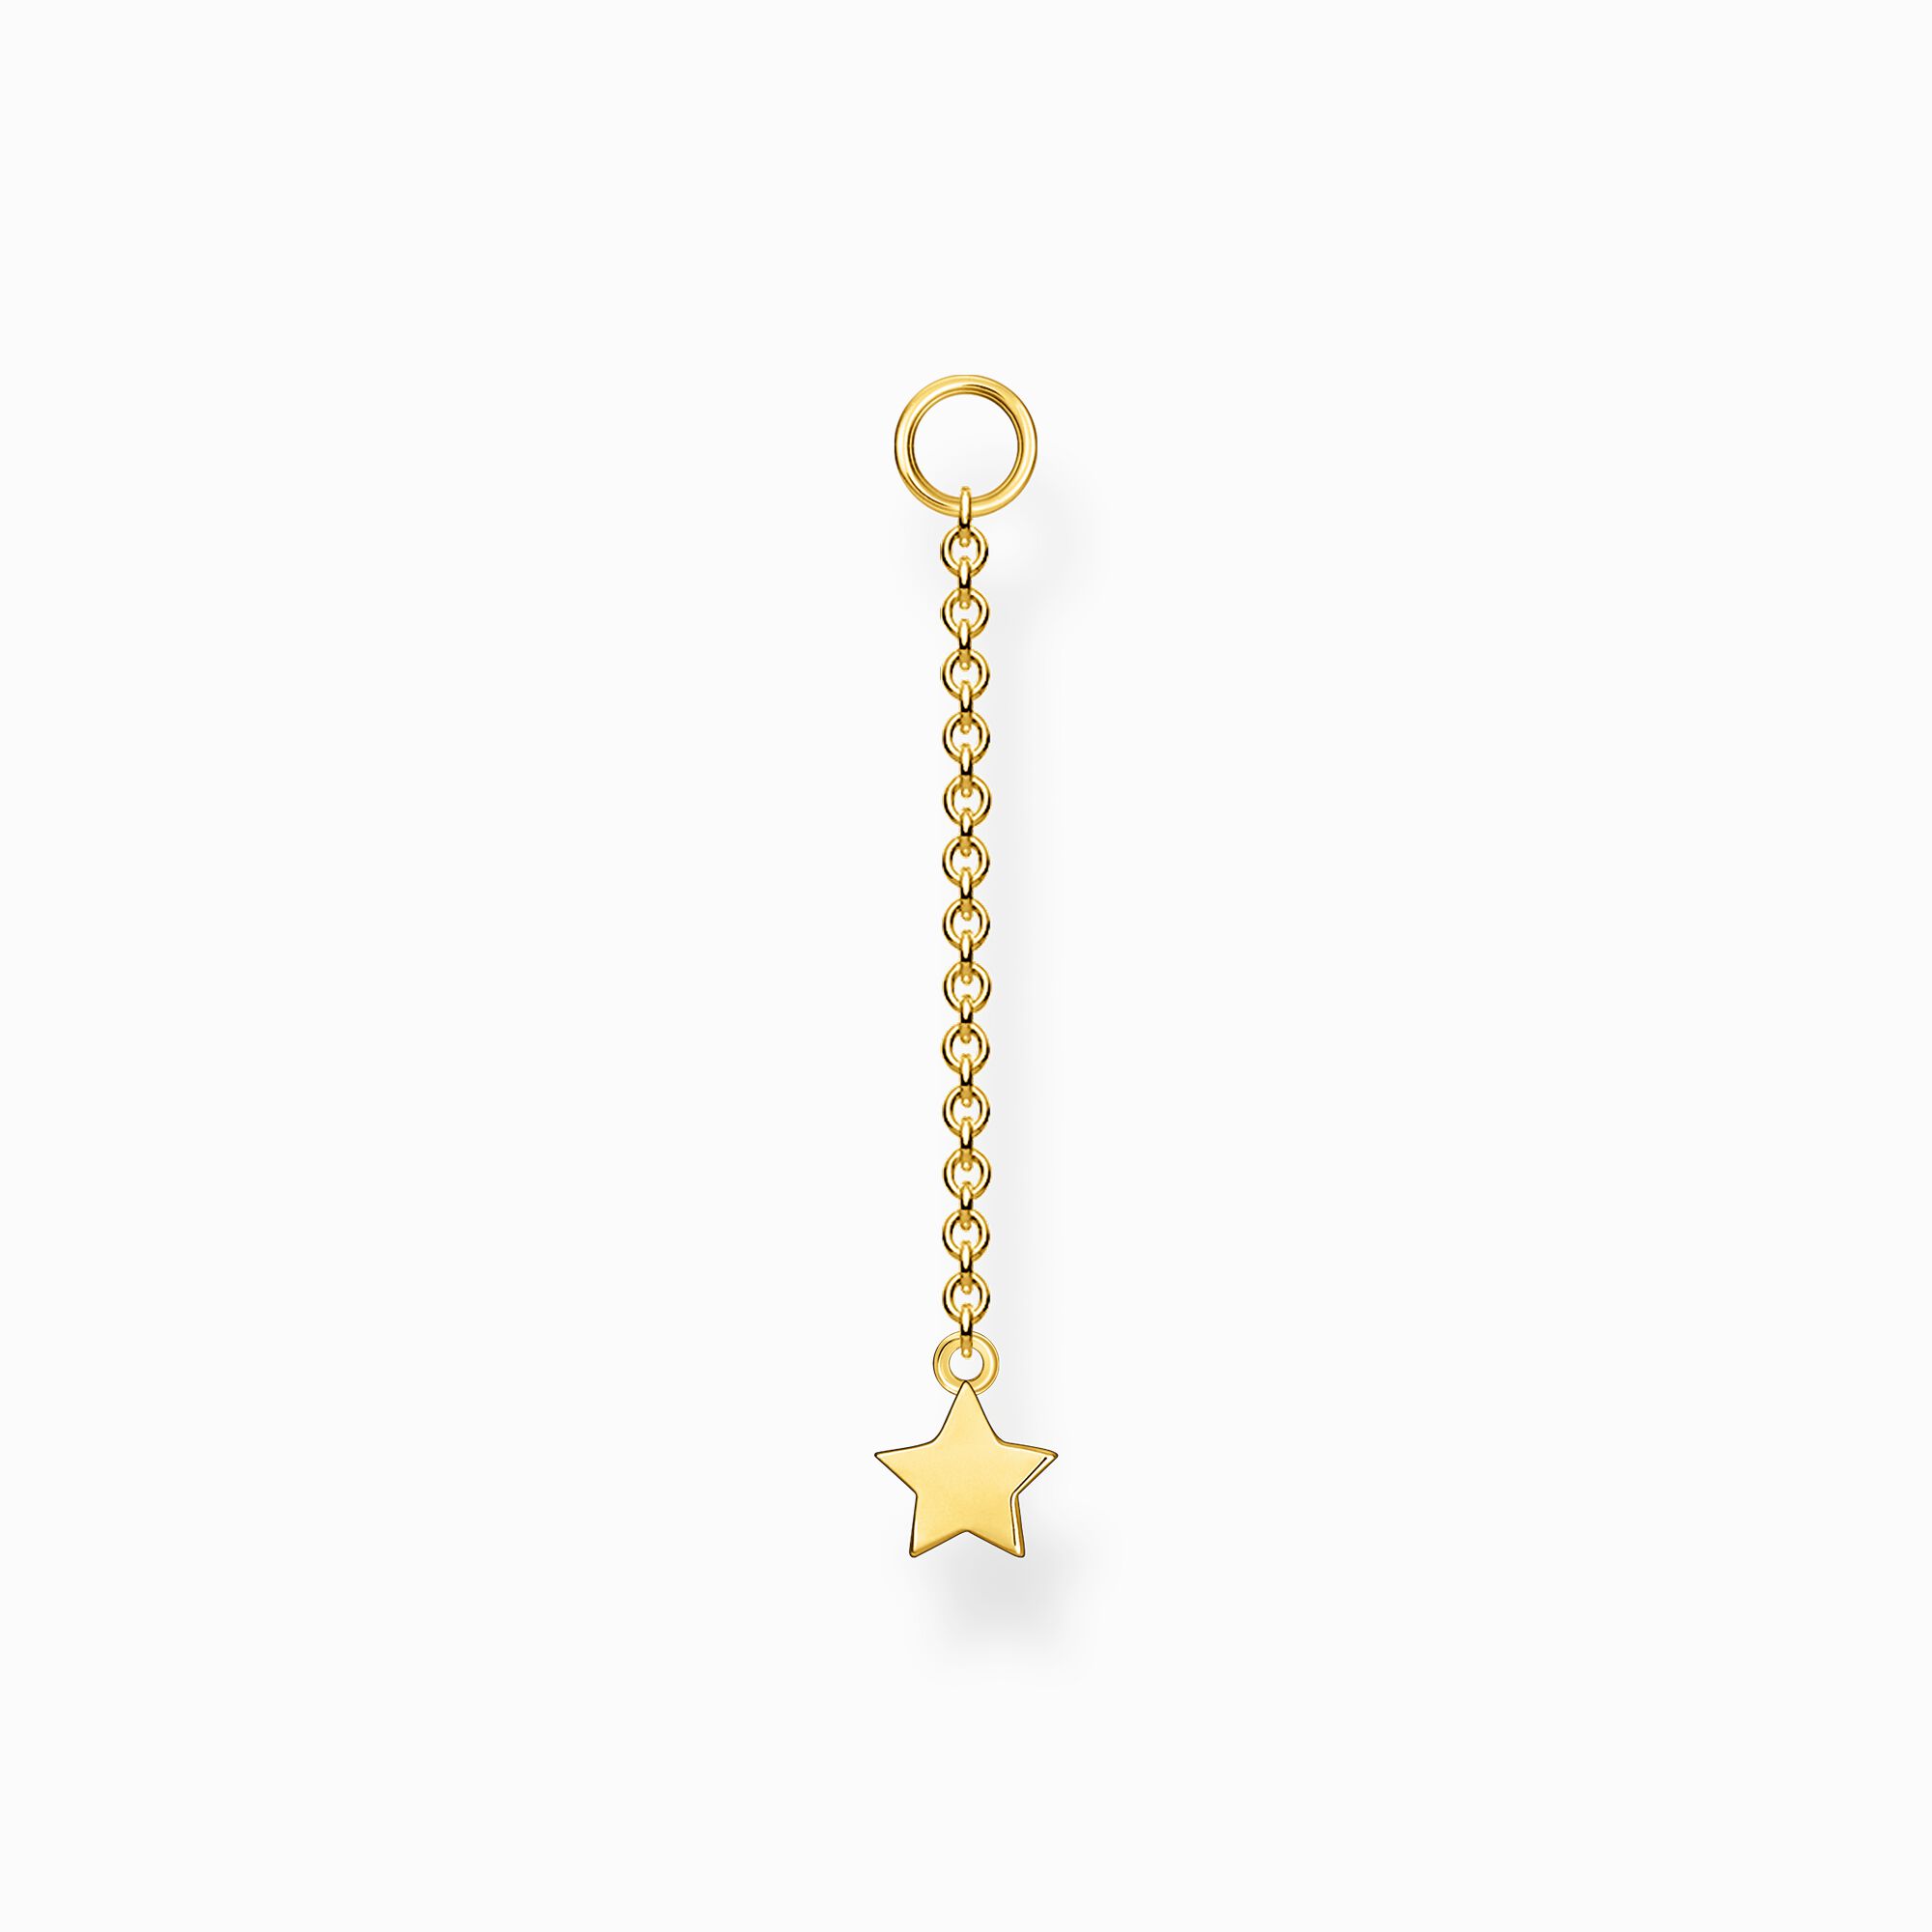 Thomas Sabo + Single Gold Star Ear Pendant